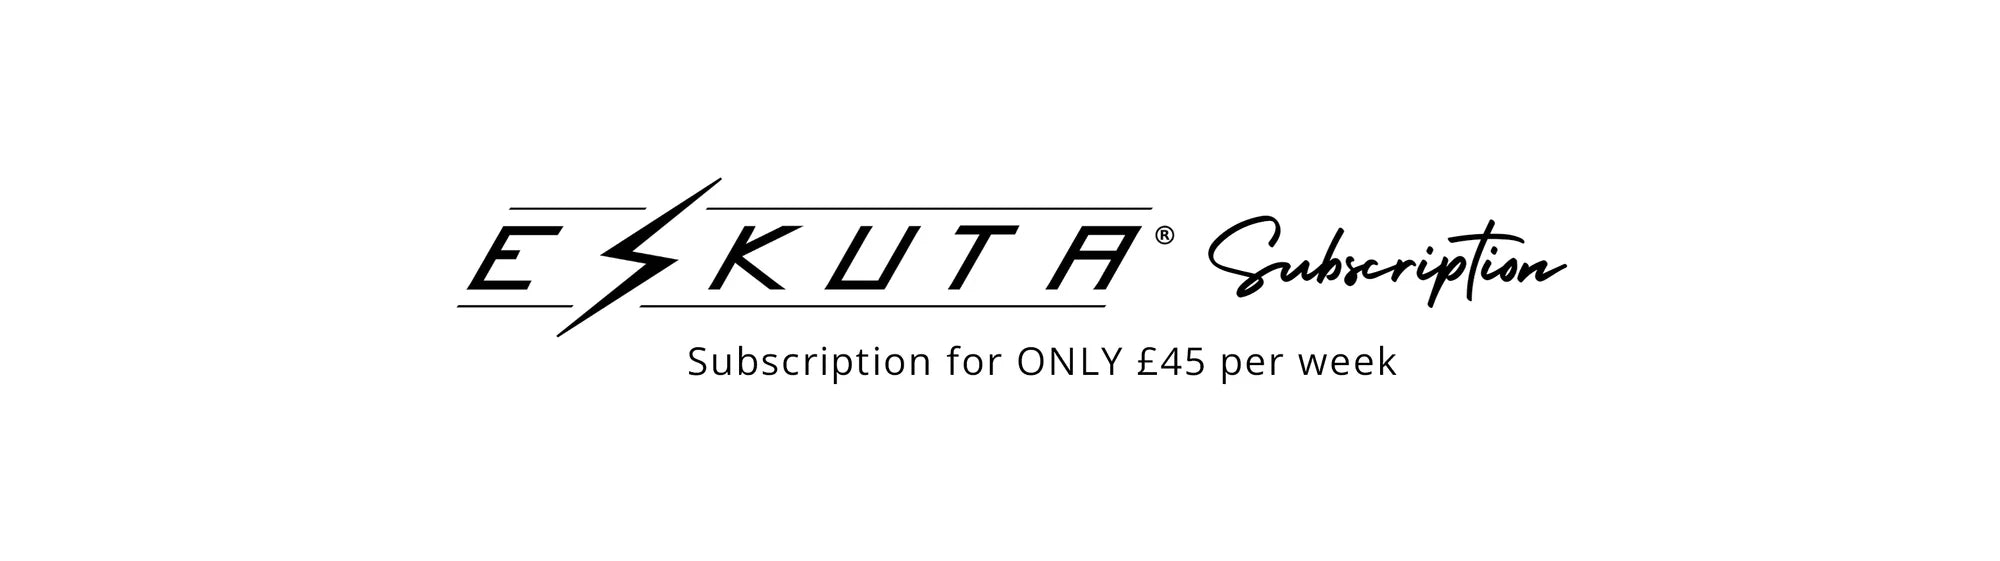 Eskuta-Subscription-Banner